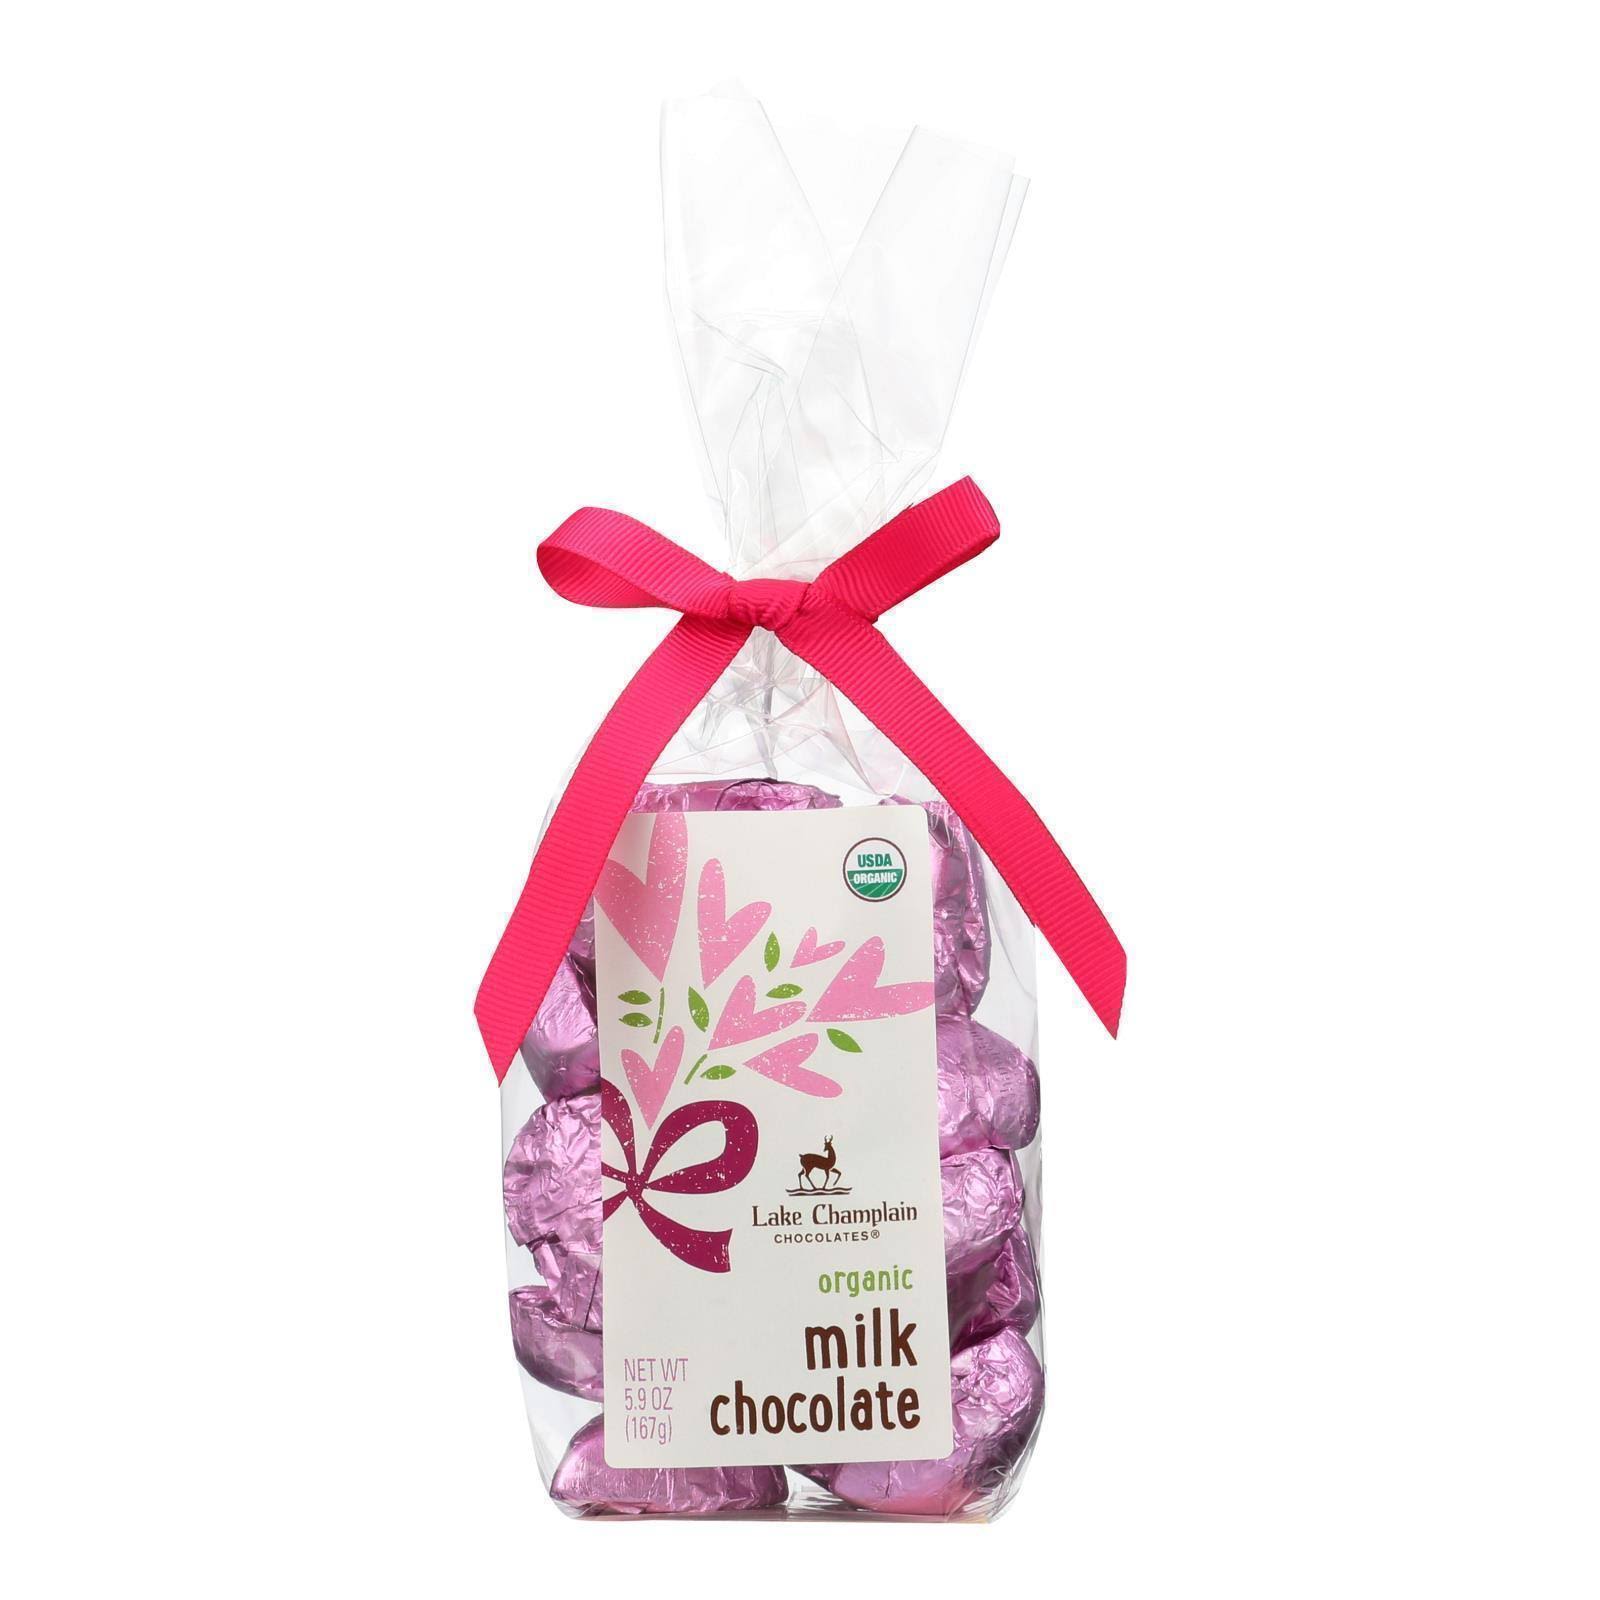 Lake Champlain Chocolates Organic Milk Chocolate Heart-shaped Candies - Case Of 12 - 5.9 Oz